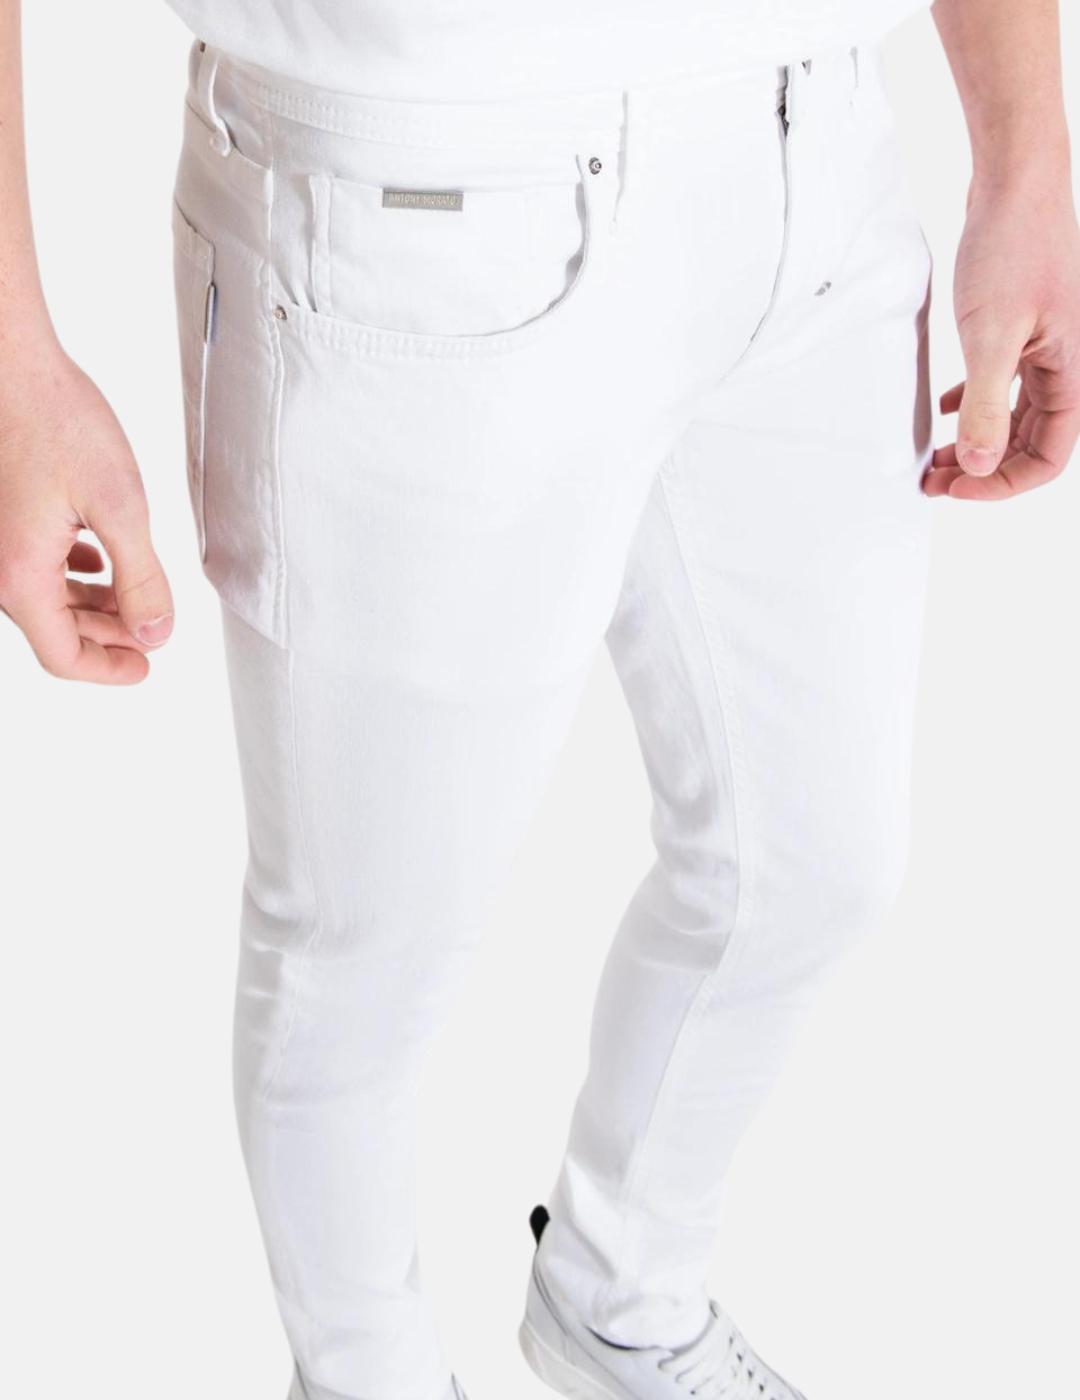 Pantalones Antony Morato blancos para hombre